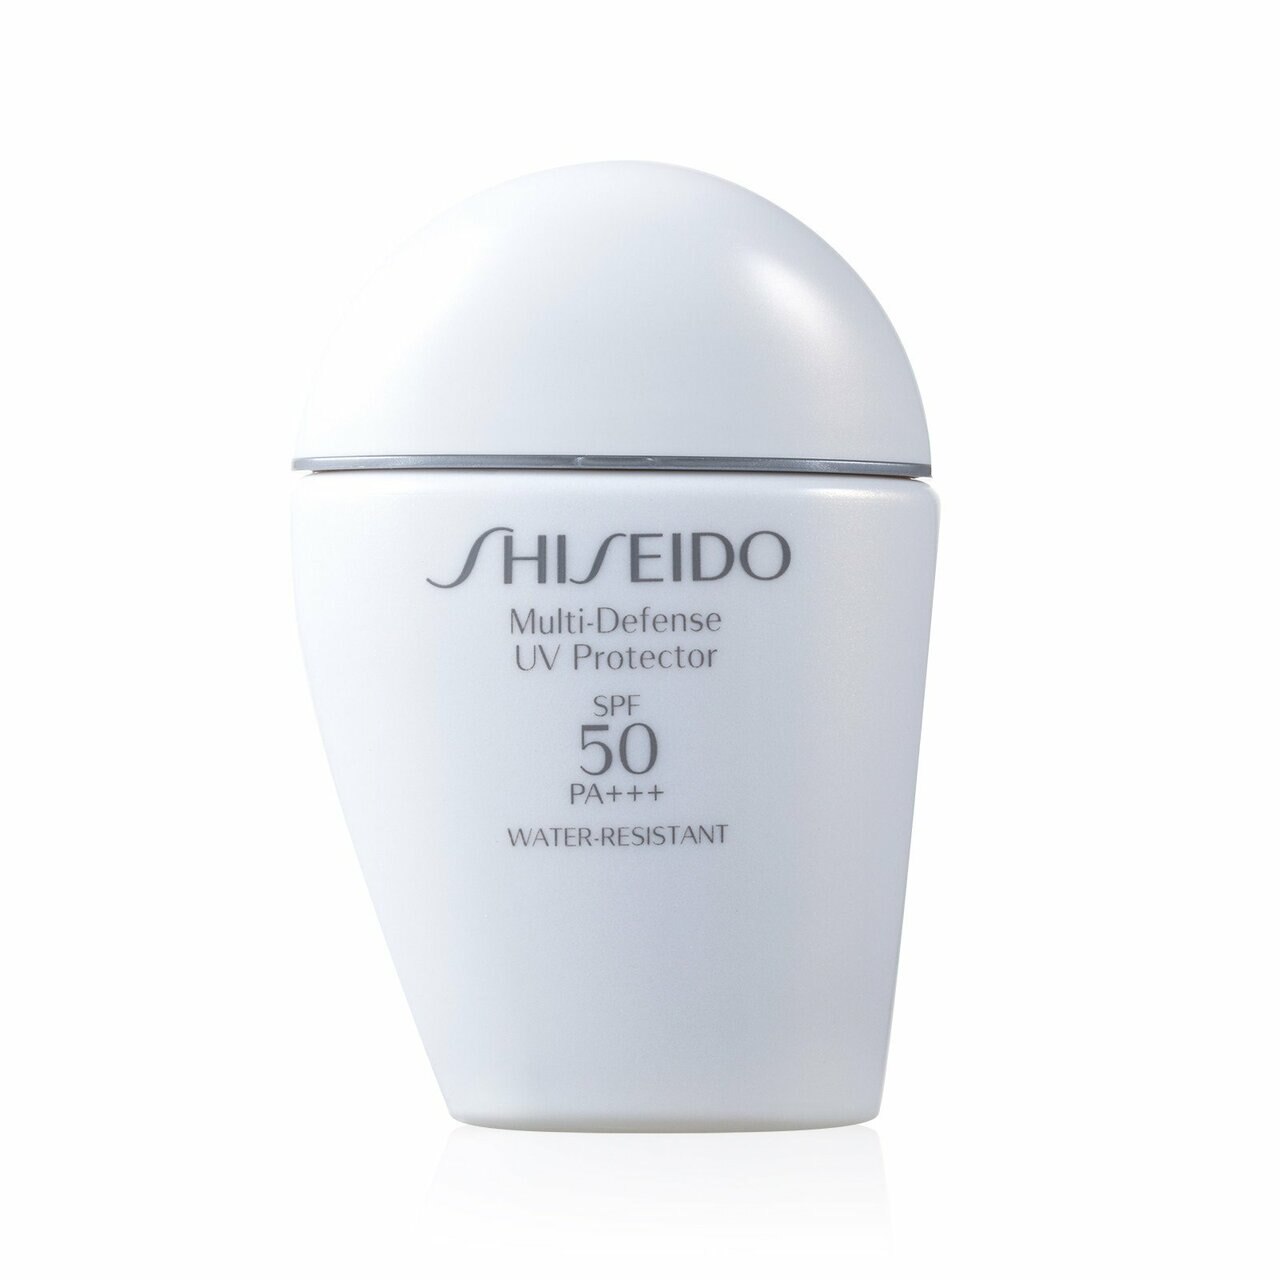 Shiseido Multi-Defense UV Protector SPF50 PA+++